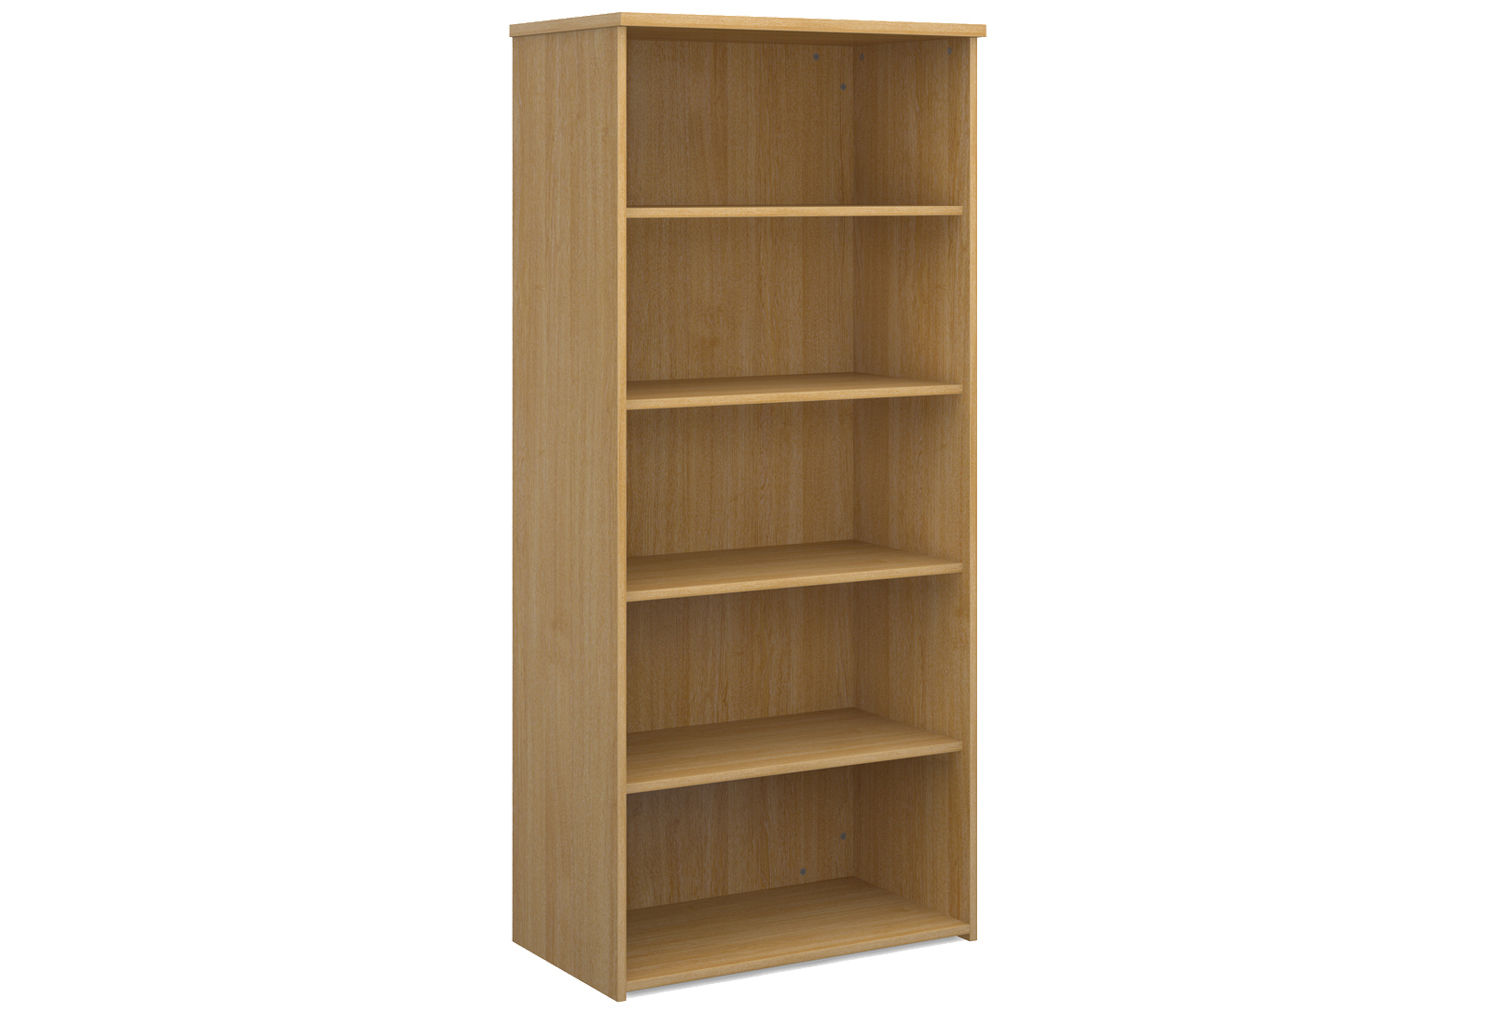 All Oak Office Bookcases, 4 Shelf - 80wx47dx179h (cm)